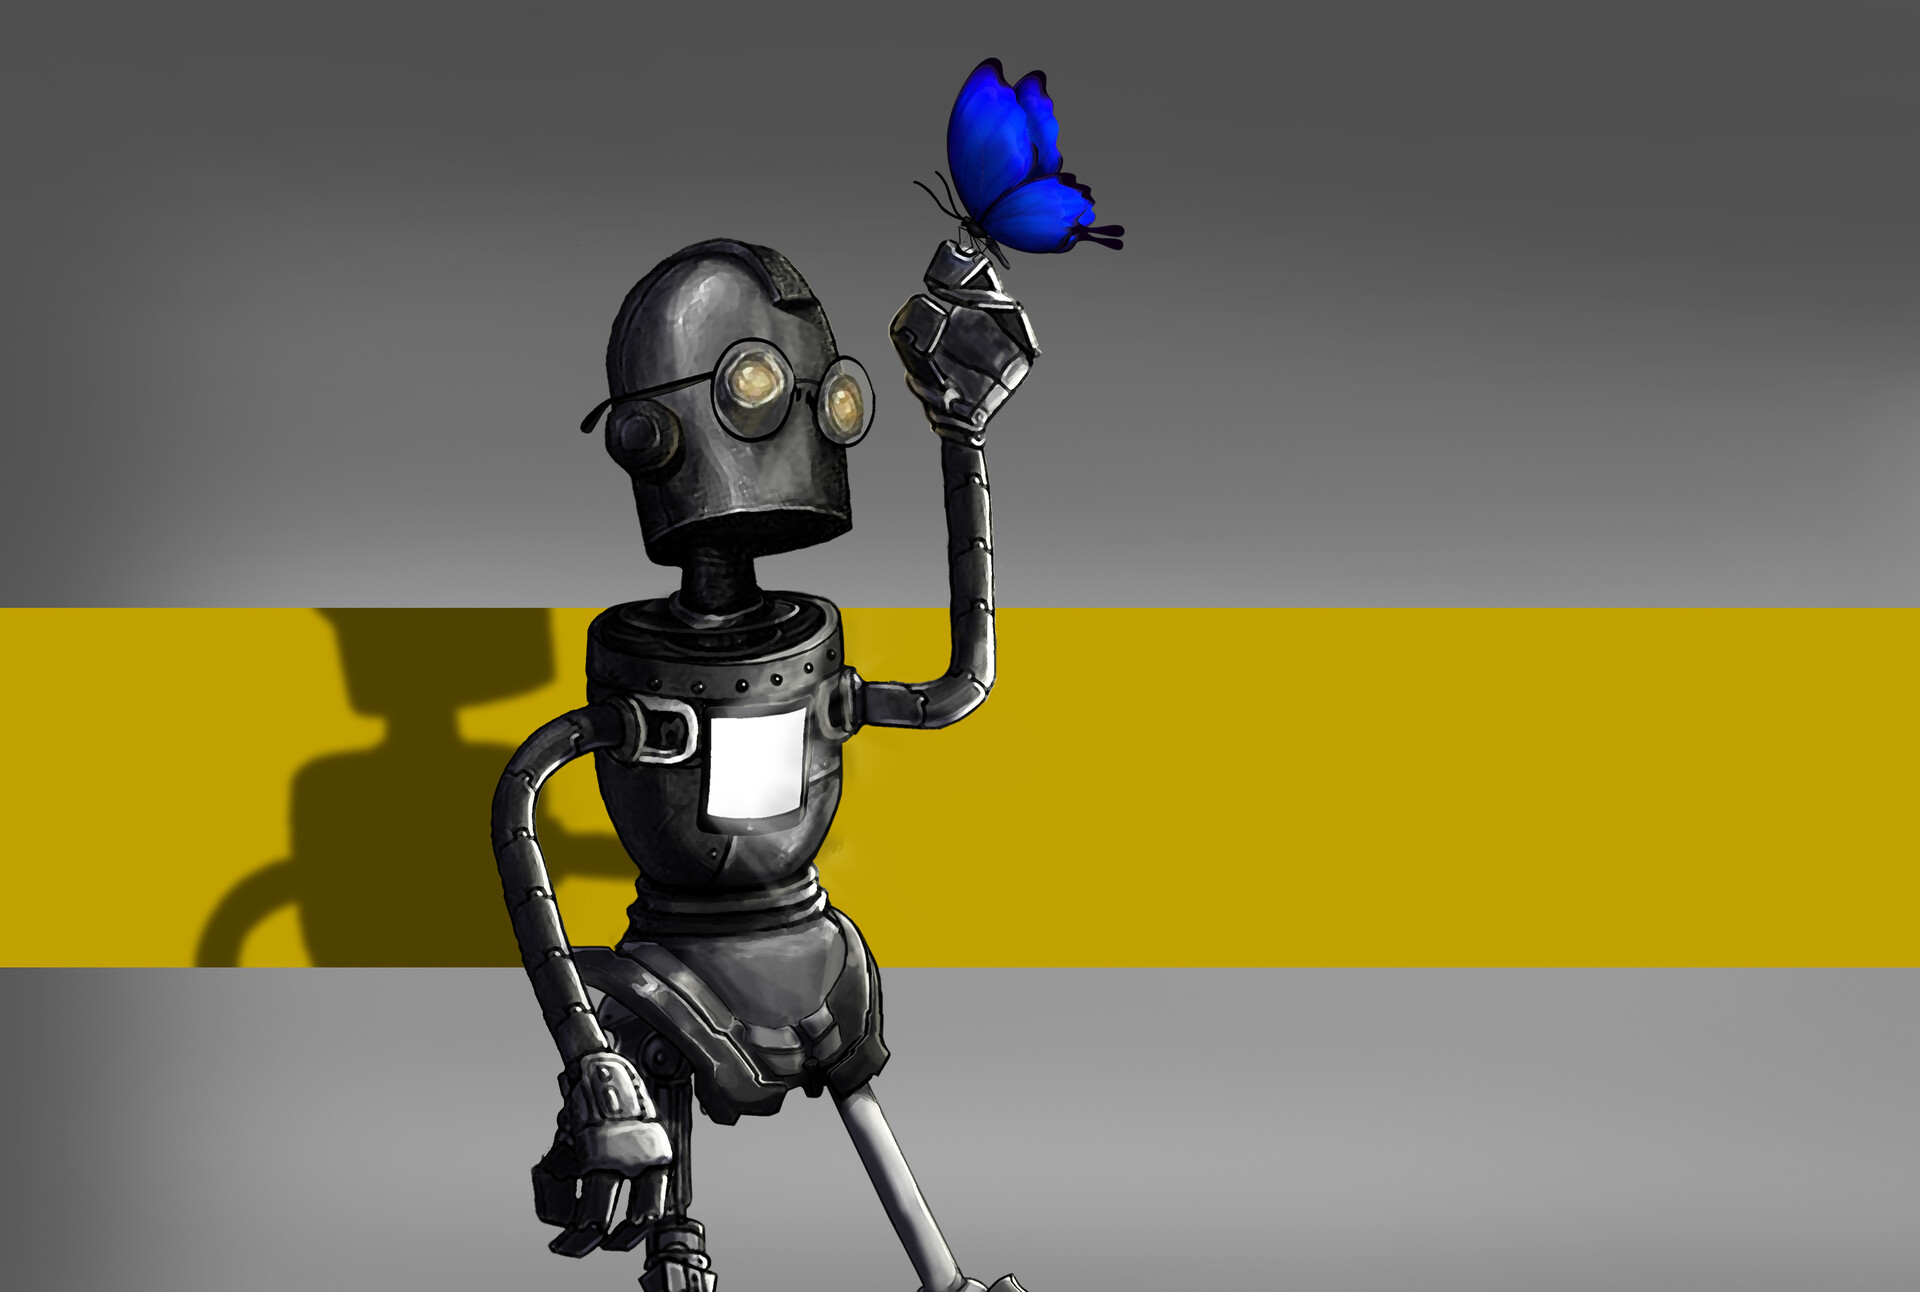 ArtStation - Robot Boy